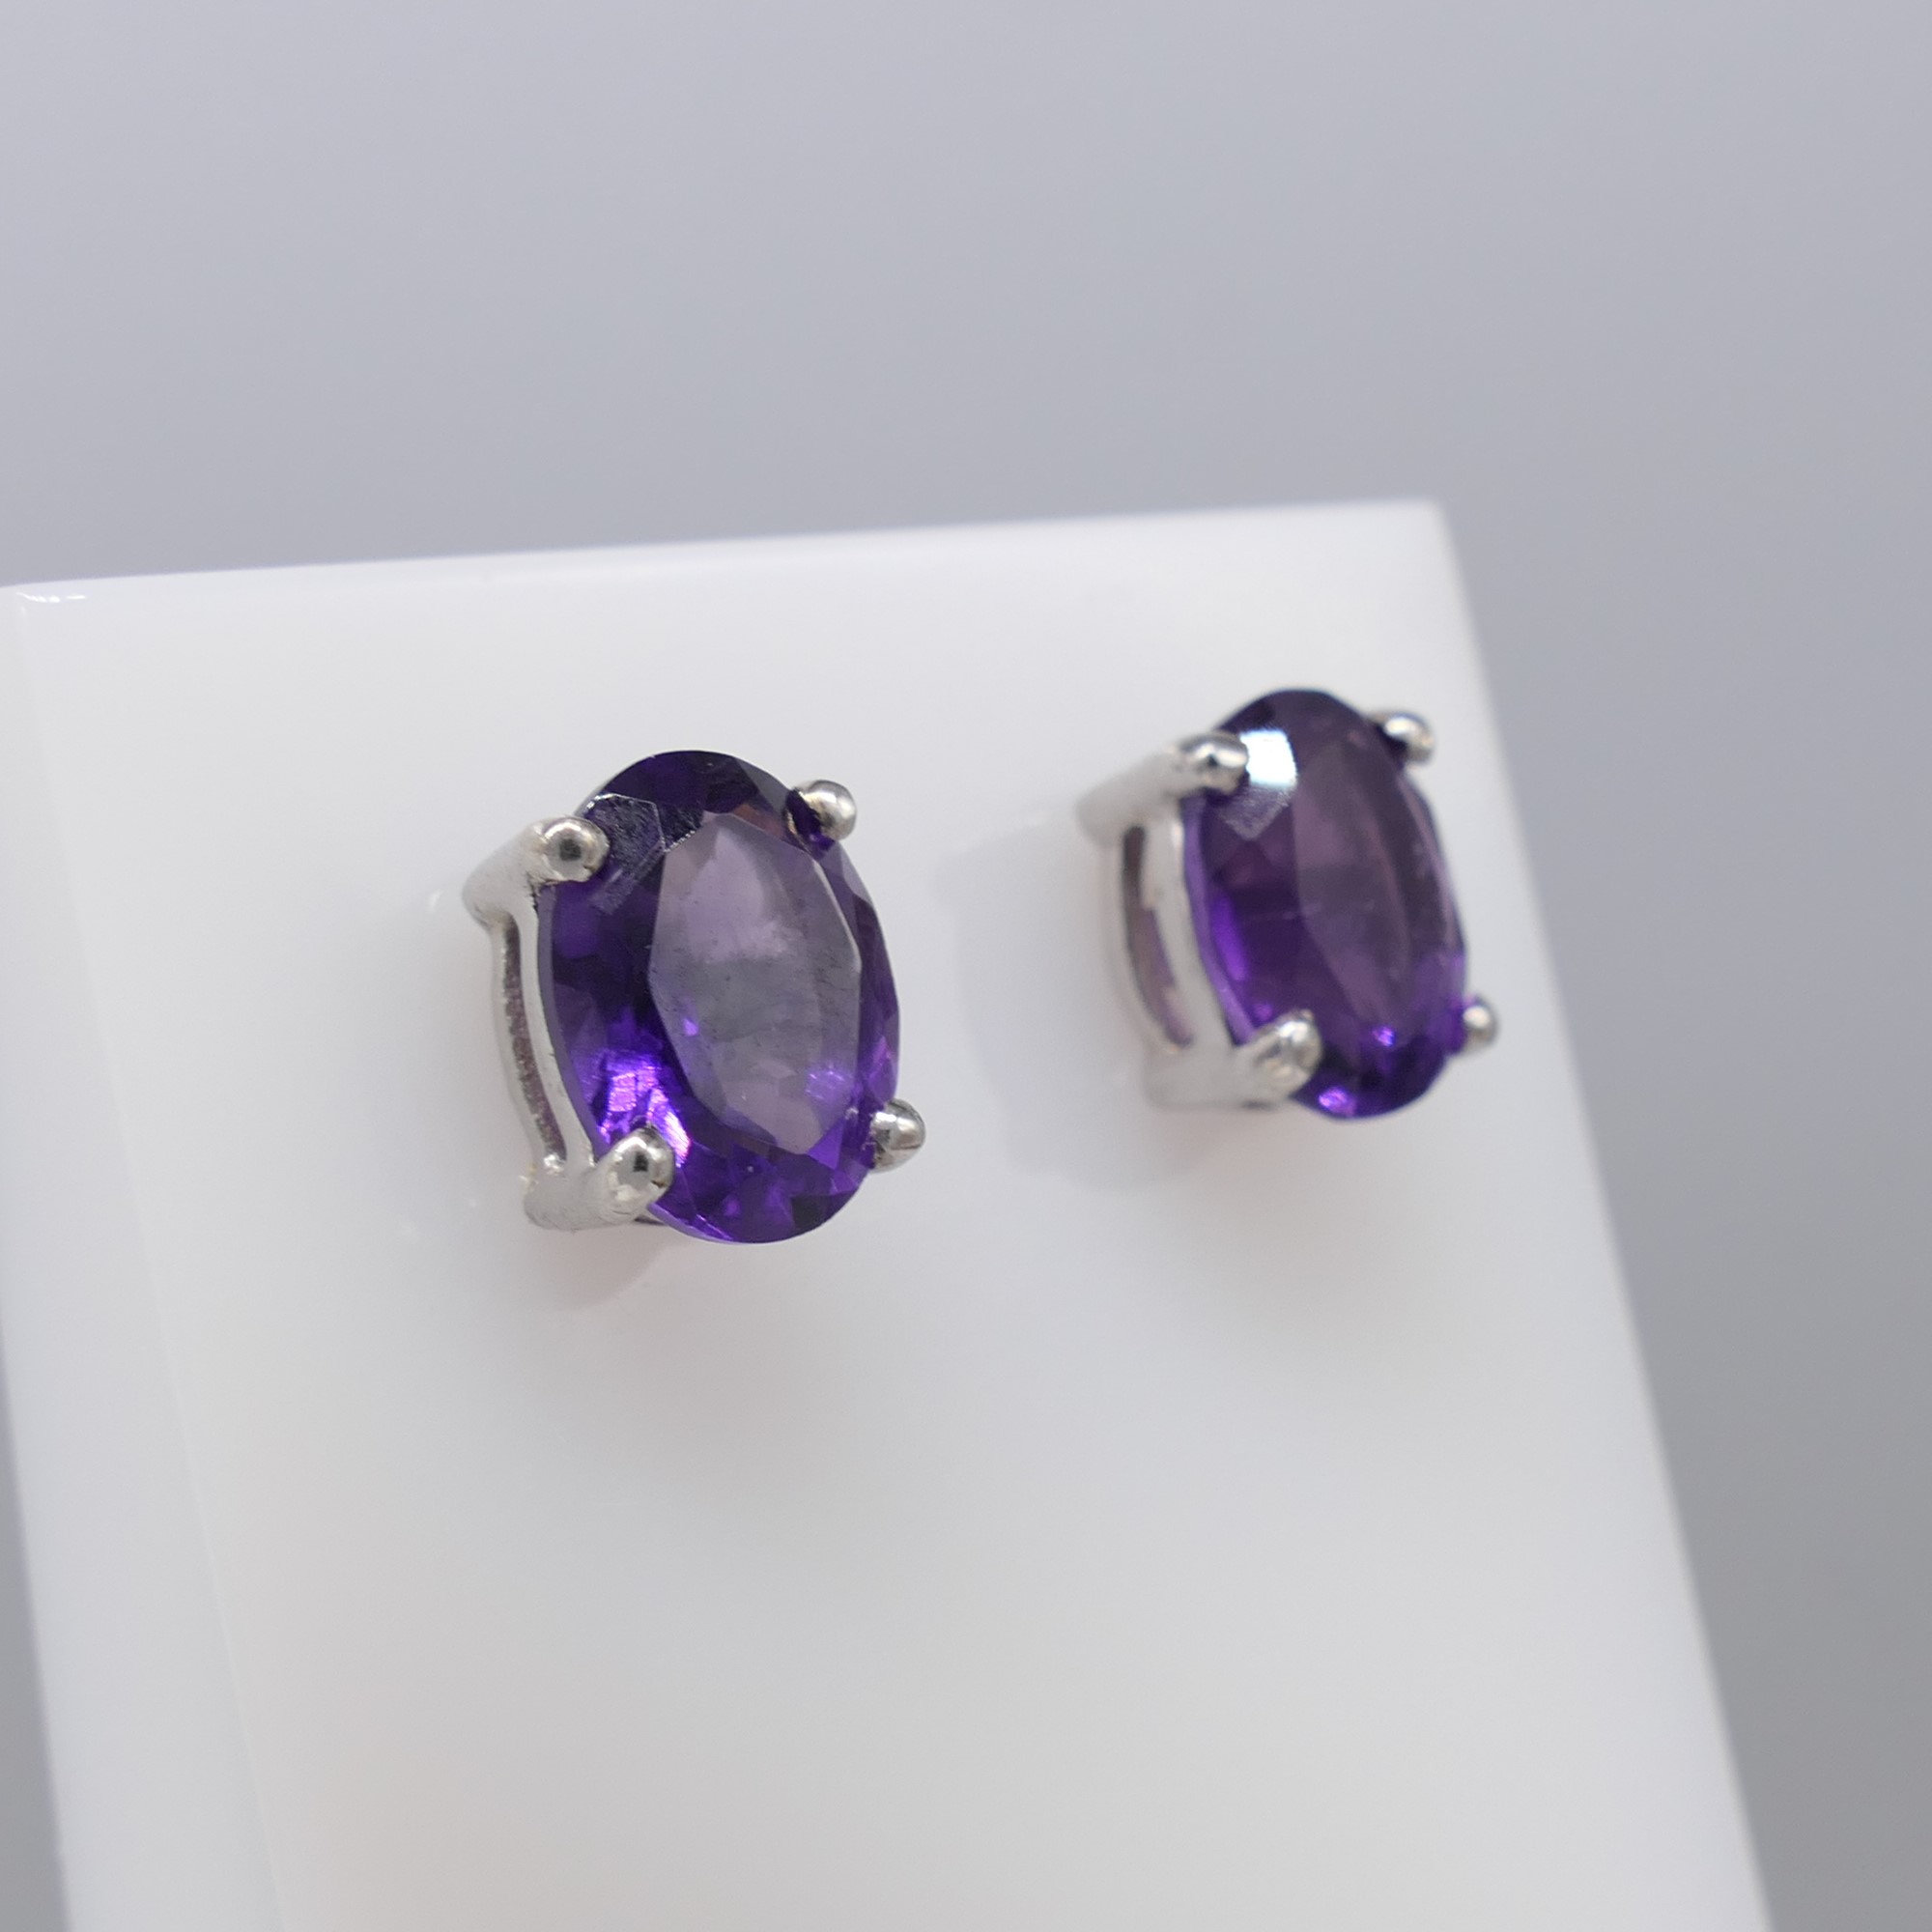 Pair of natural purple amethyst gemstone ear studs in silver - Image 4 of 5